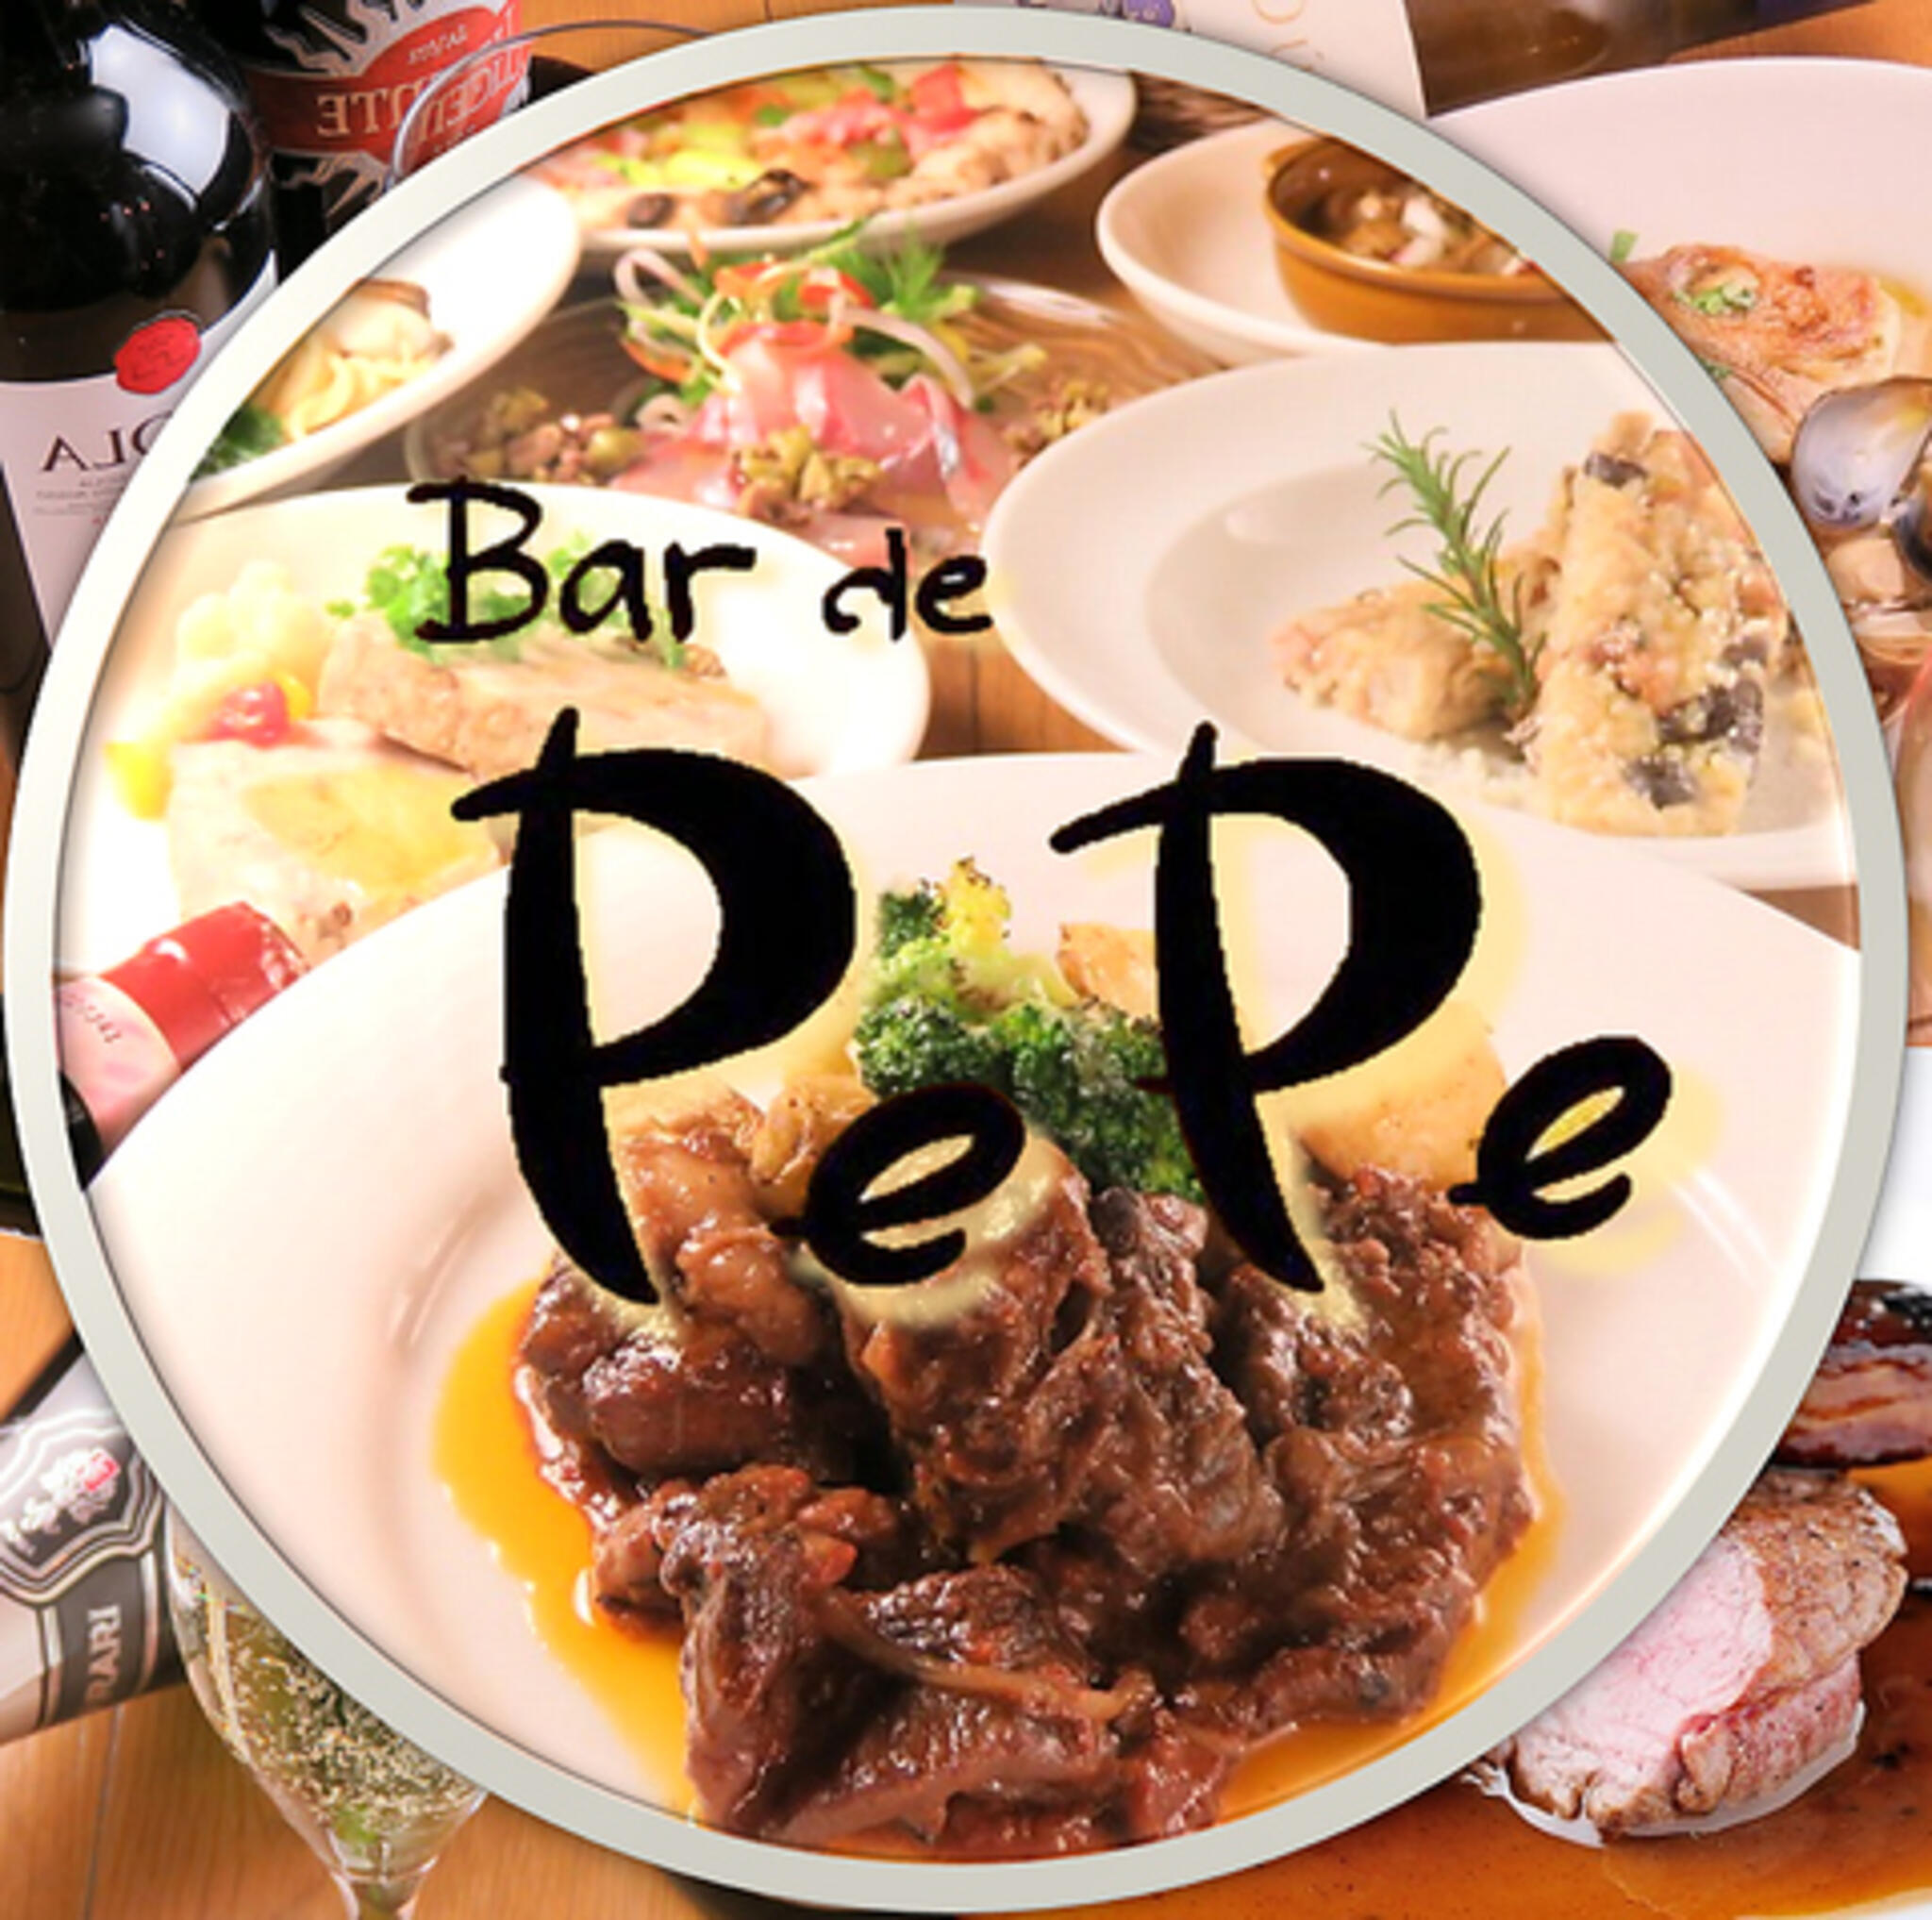 Bar de PePeの代表写真1